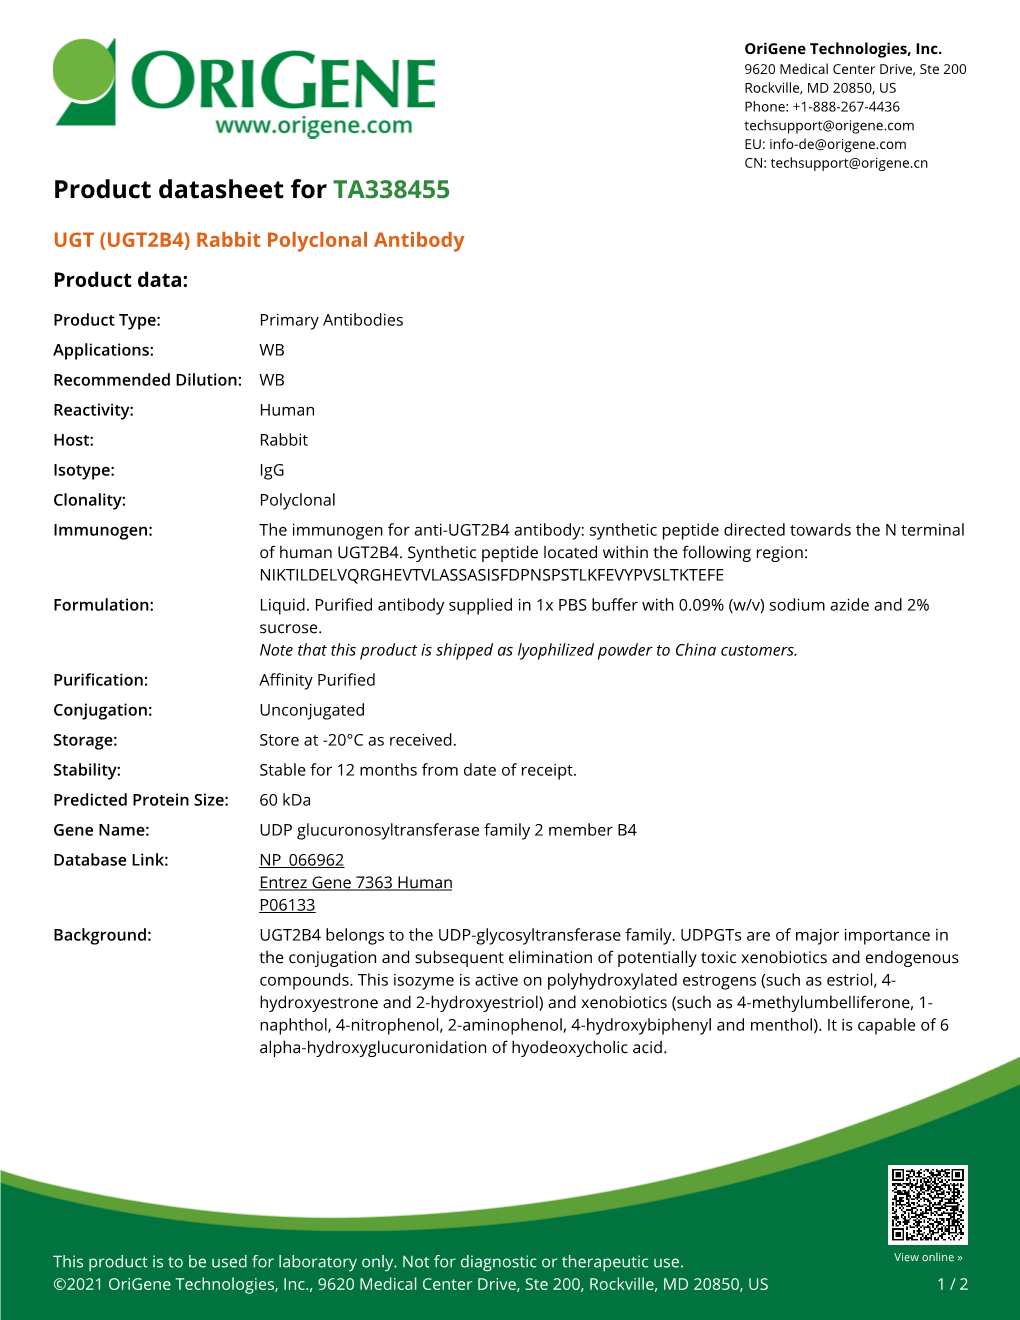 UGT (UGT2B4) Rabbit Polyclonal Antibody – TA338455 | Origene